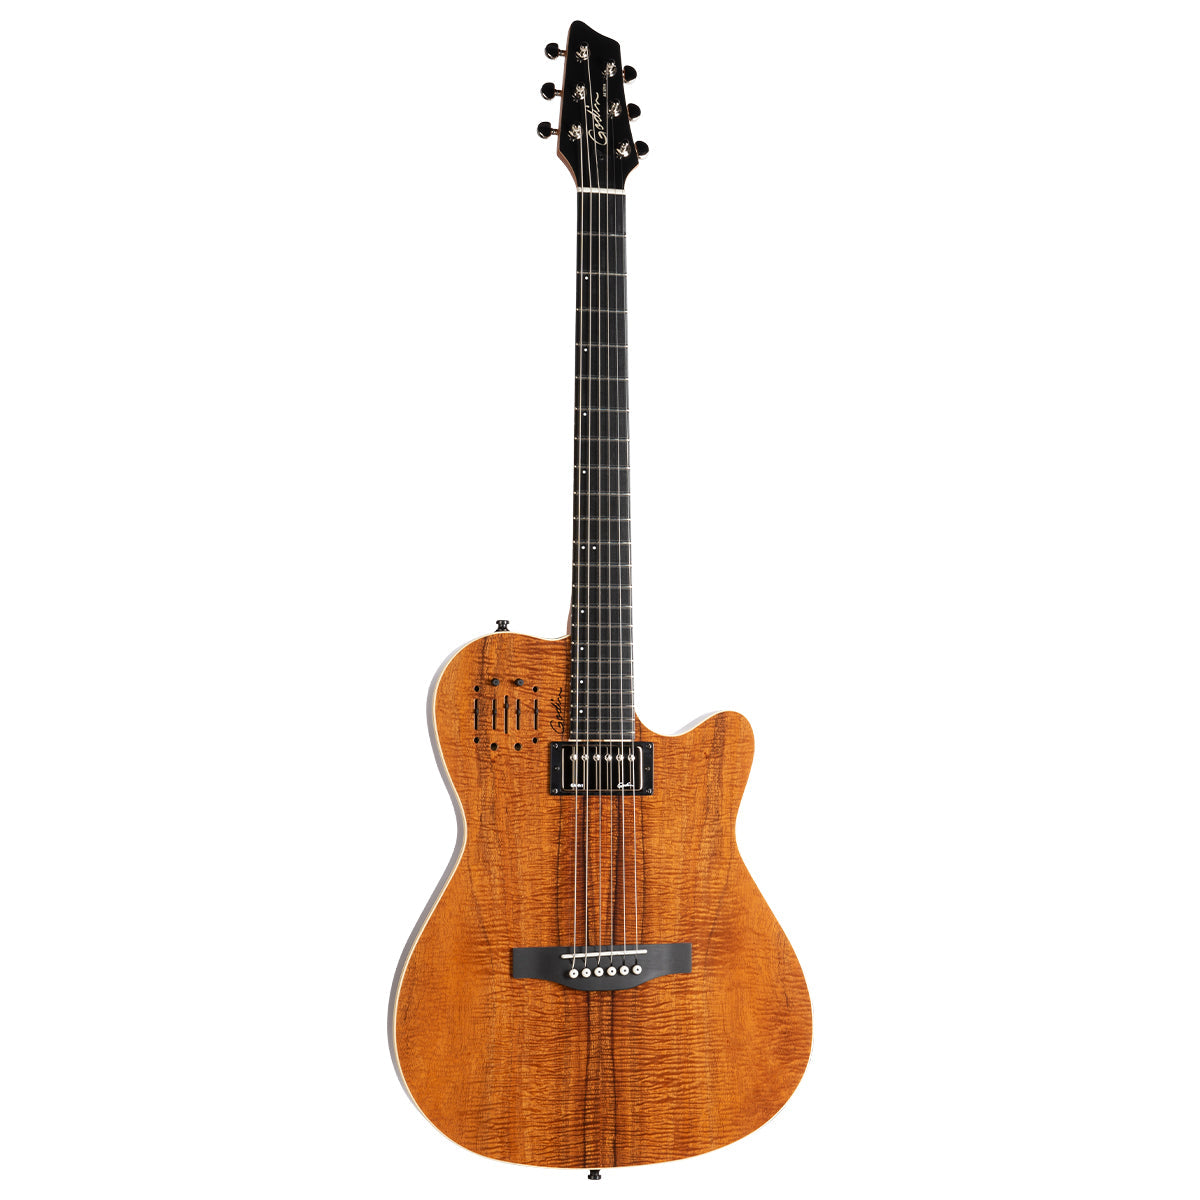 Godin A6 Ultra Electric Guitar ~ Extreme Koa HG, Electric Guitar for sale at Richards Guitars.